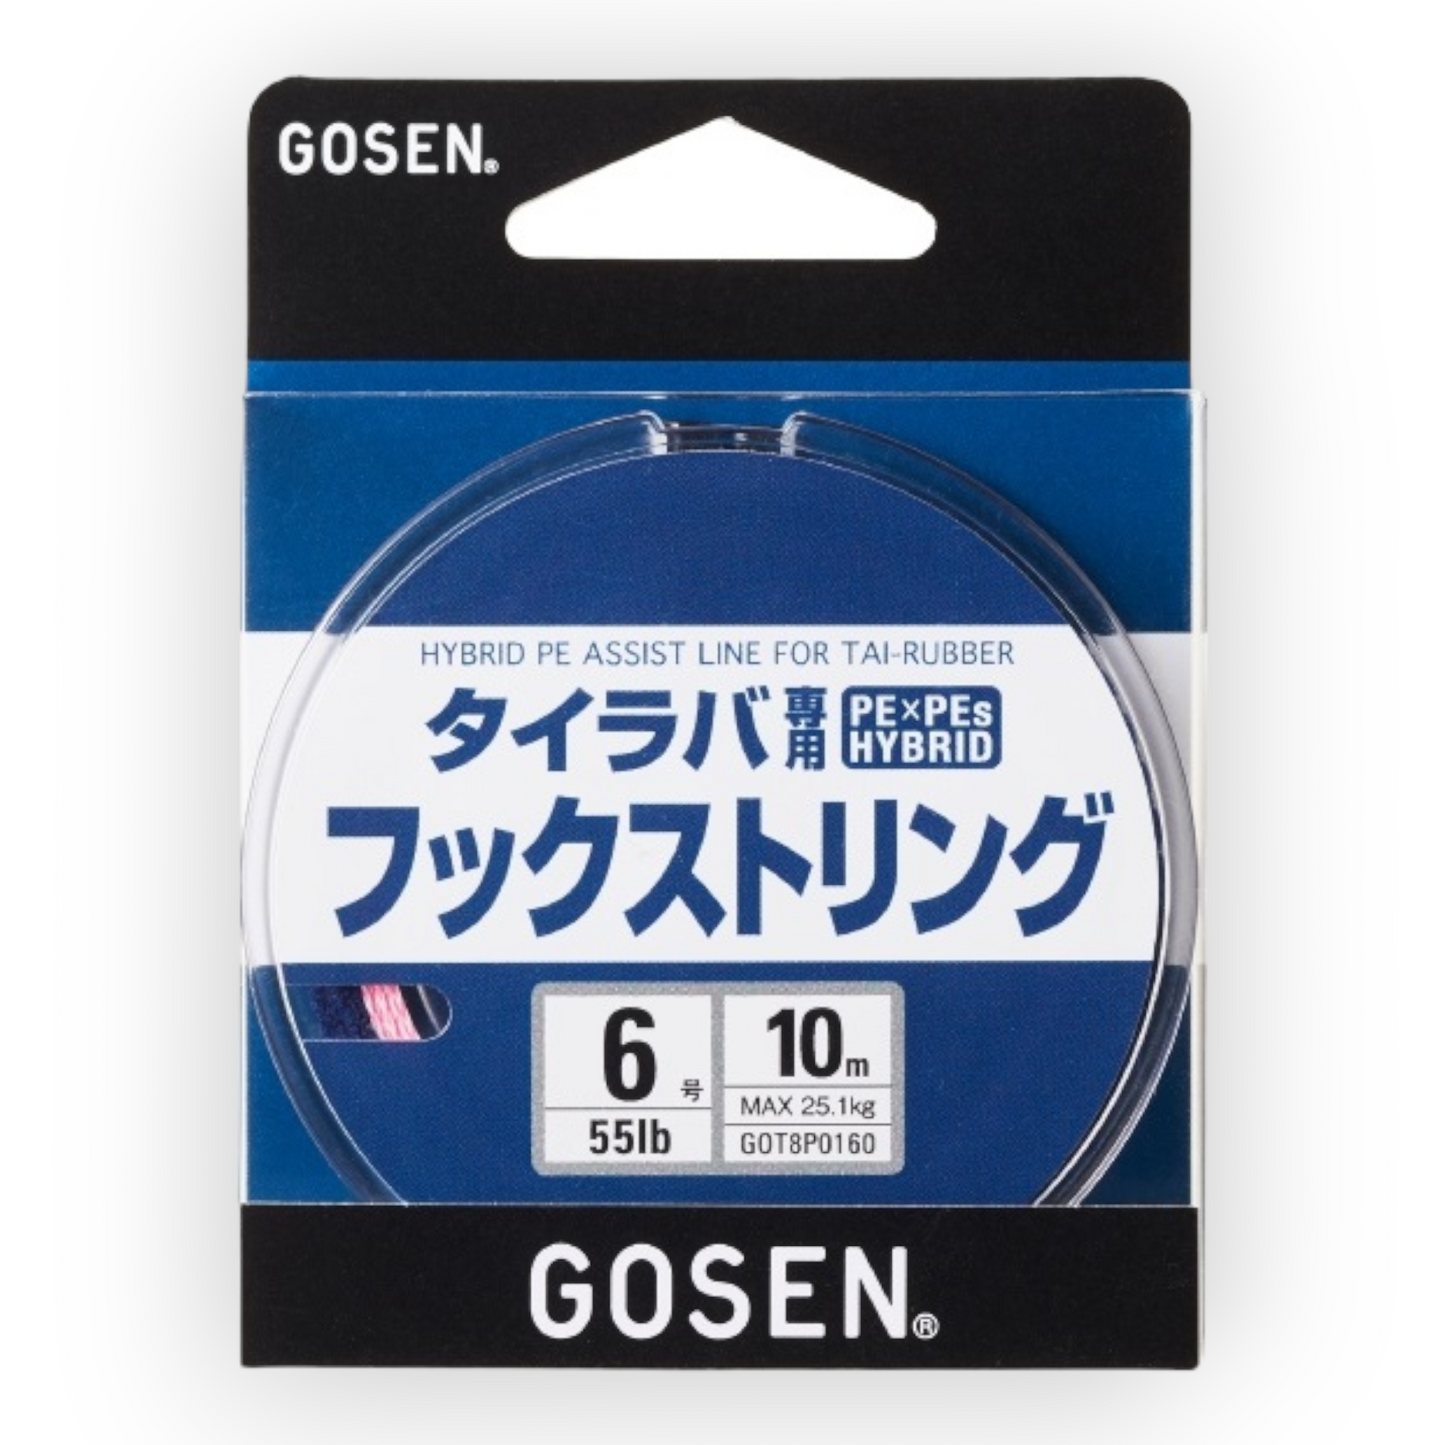 Gosen Tai raba hybrid assist line